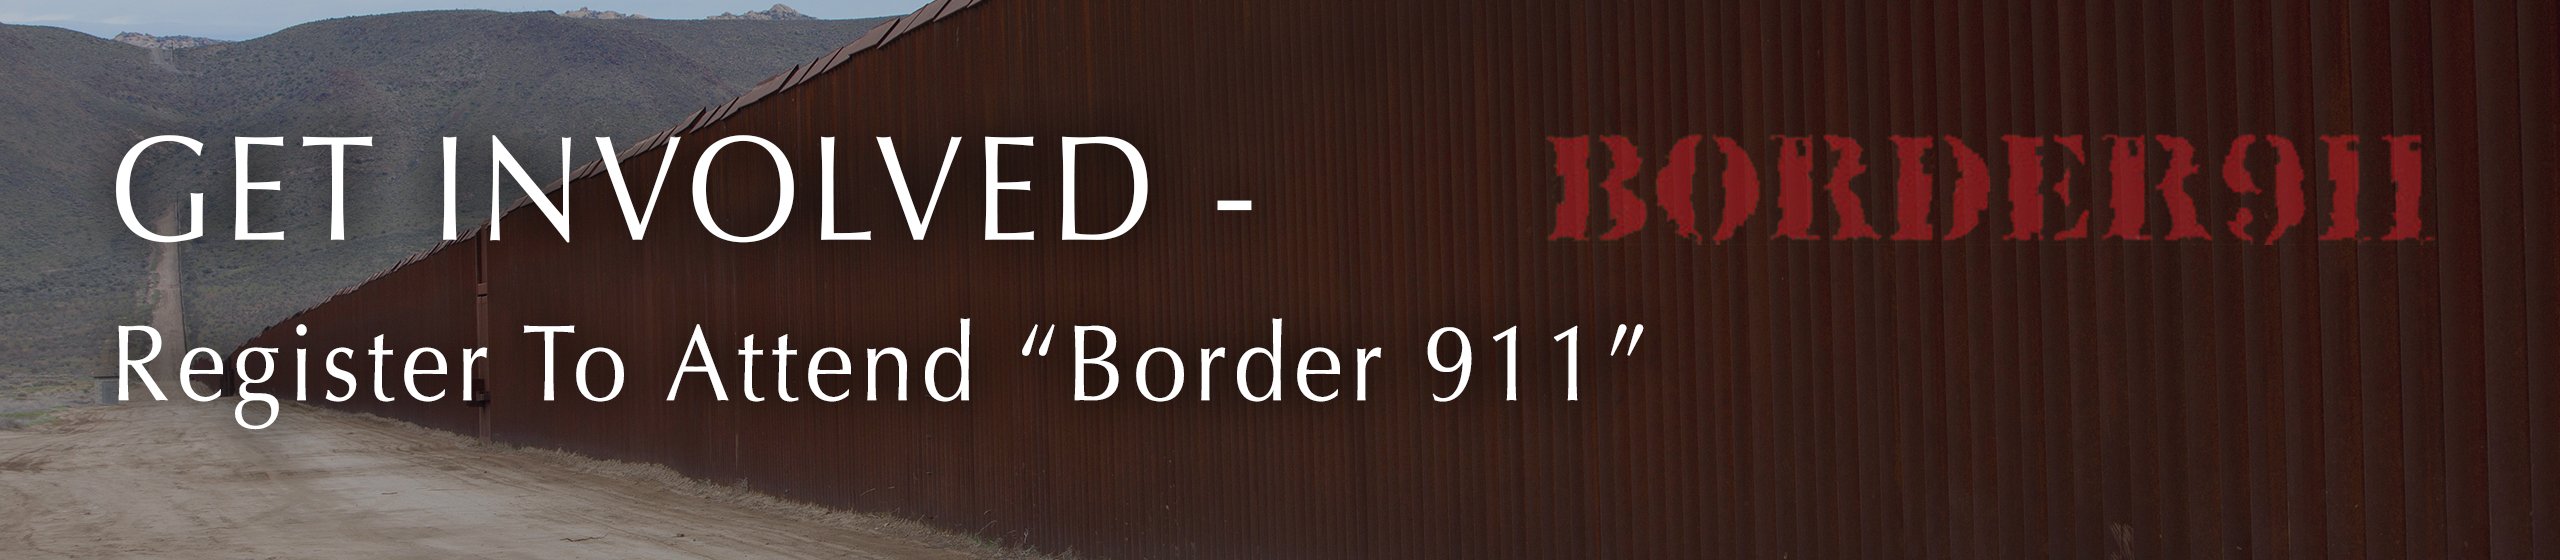 c Involved Border911